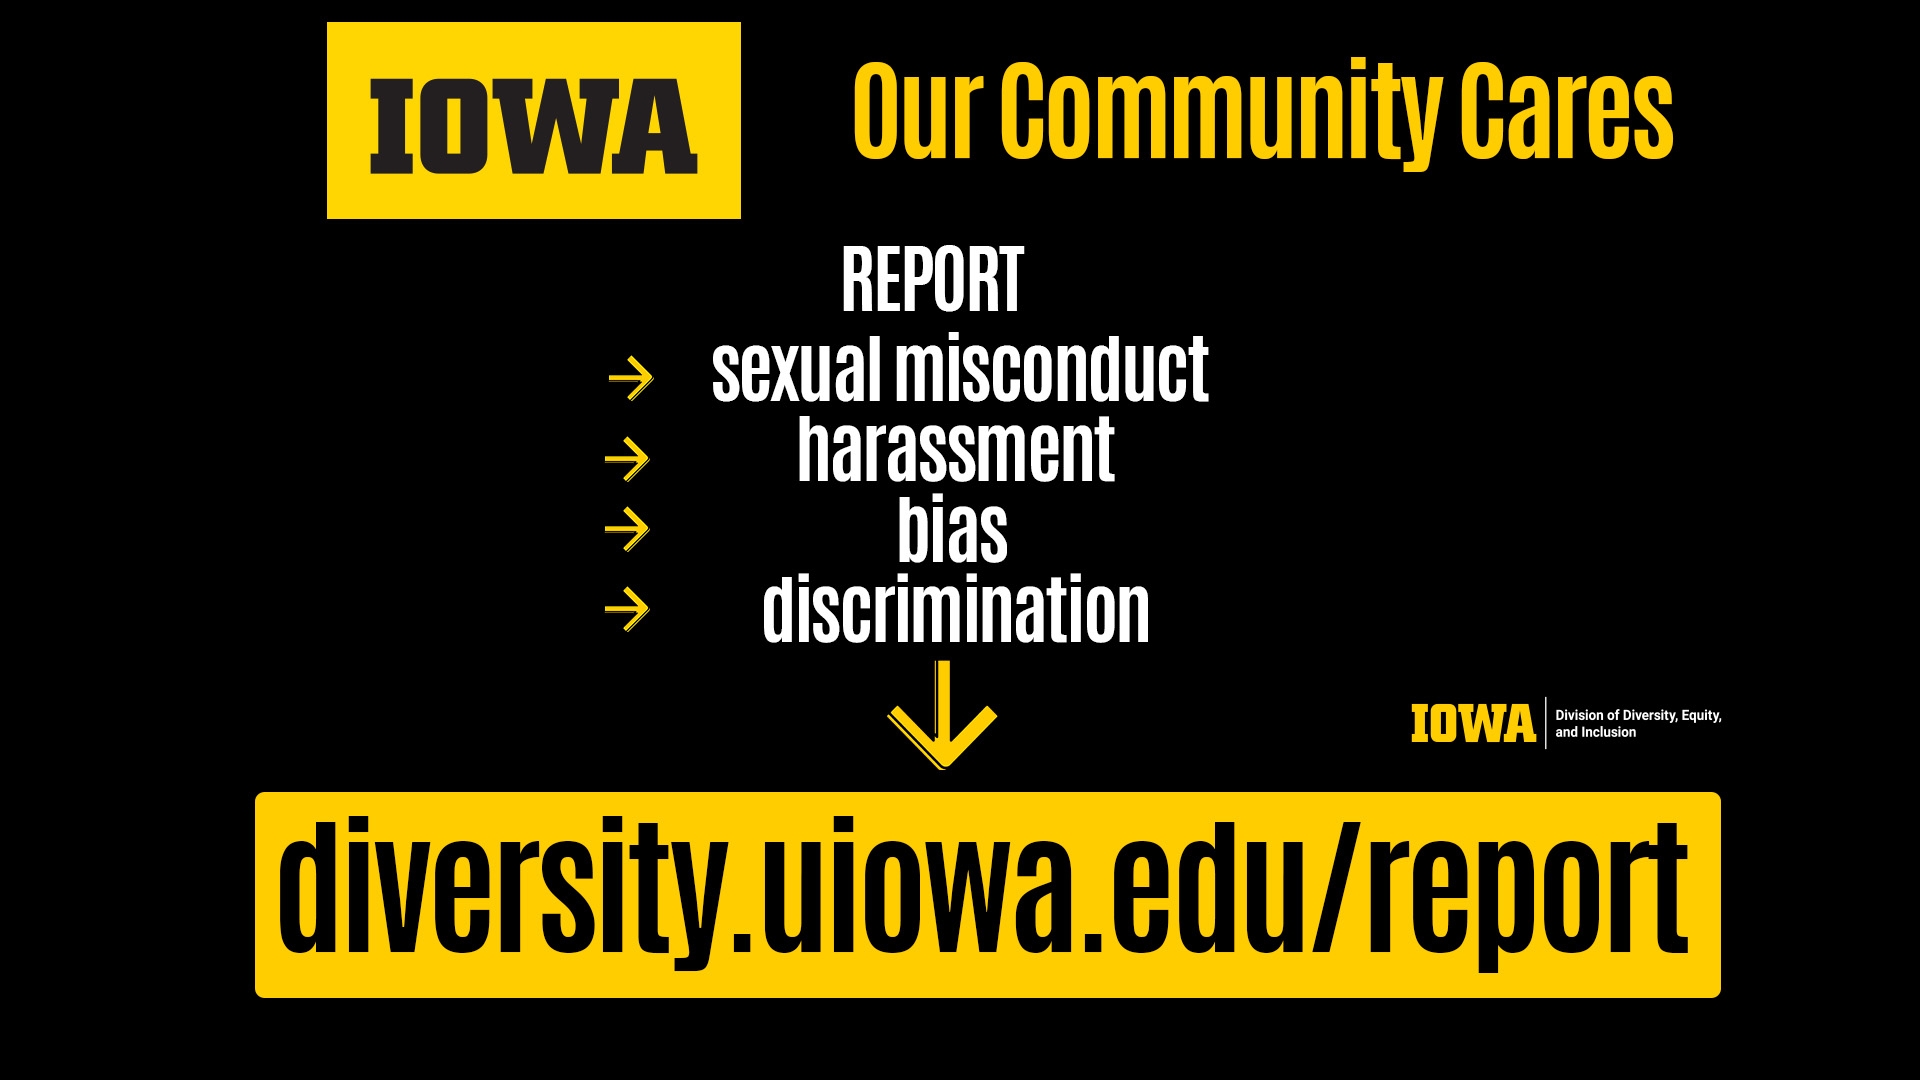 report sexual misconduct, harrassment, bias, discrimination at diversity.uiowa.edu/report